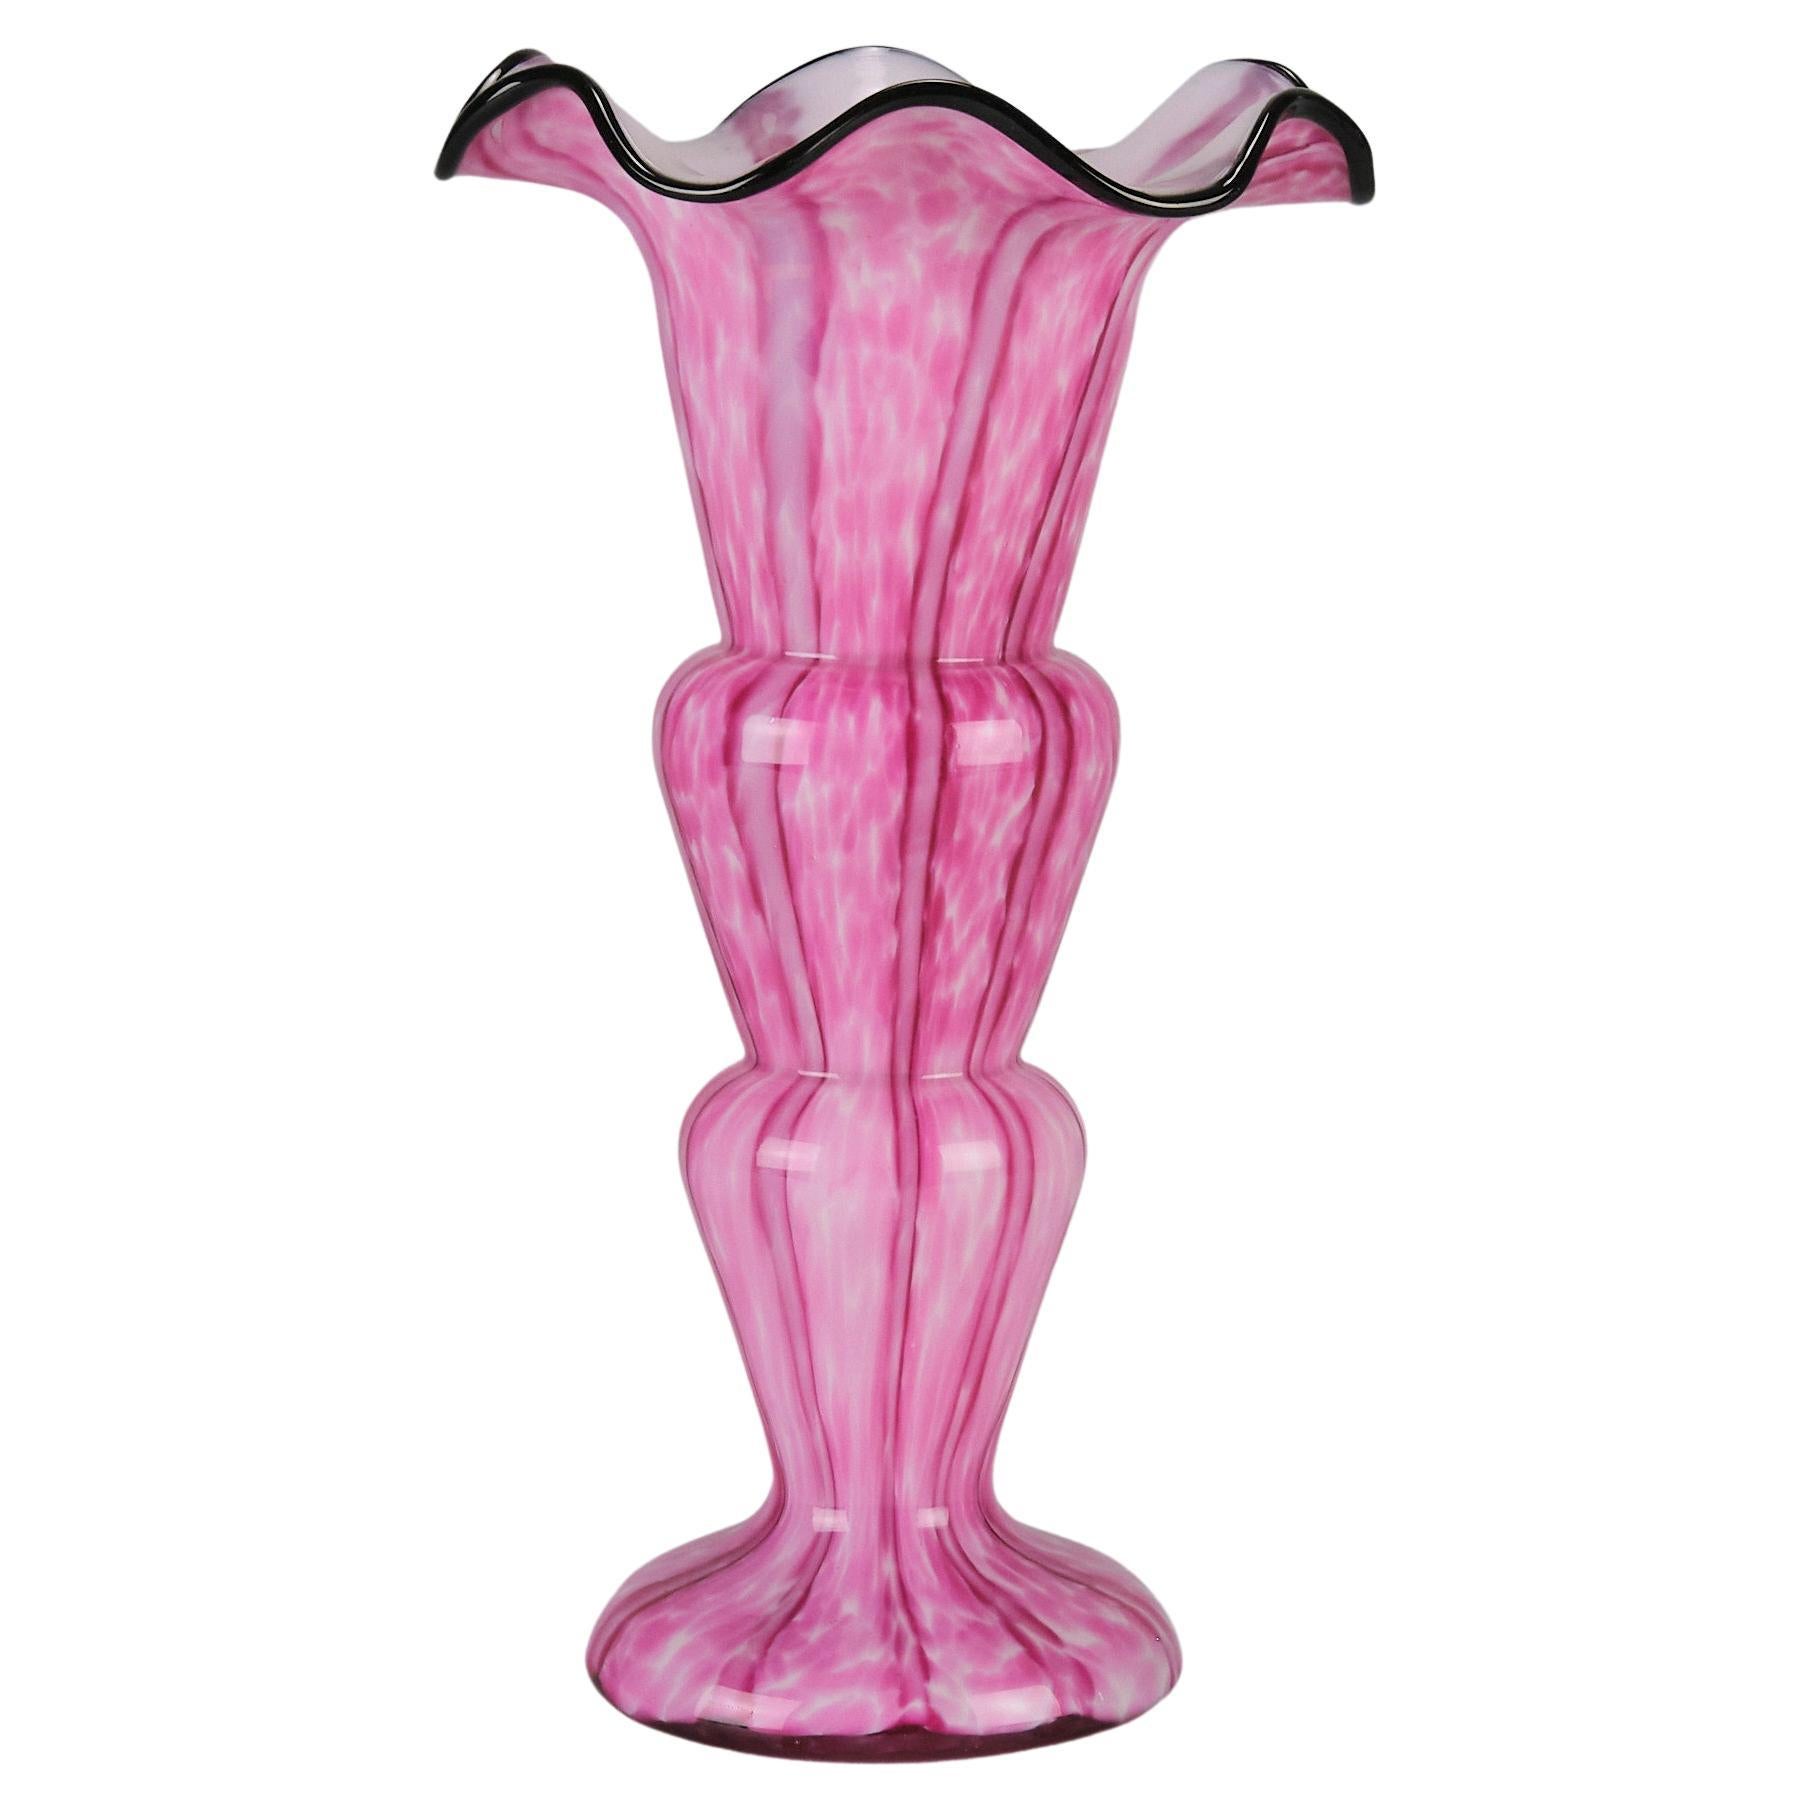 Early 20th Century Bohemian Blown Glass "Trefoil Vase" by Franz Welz